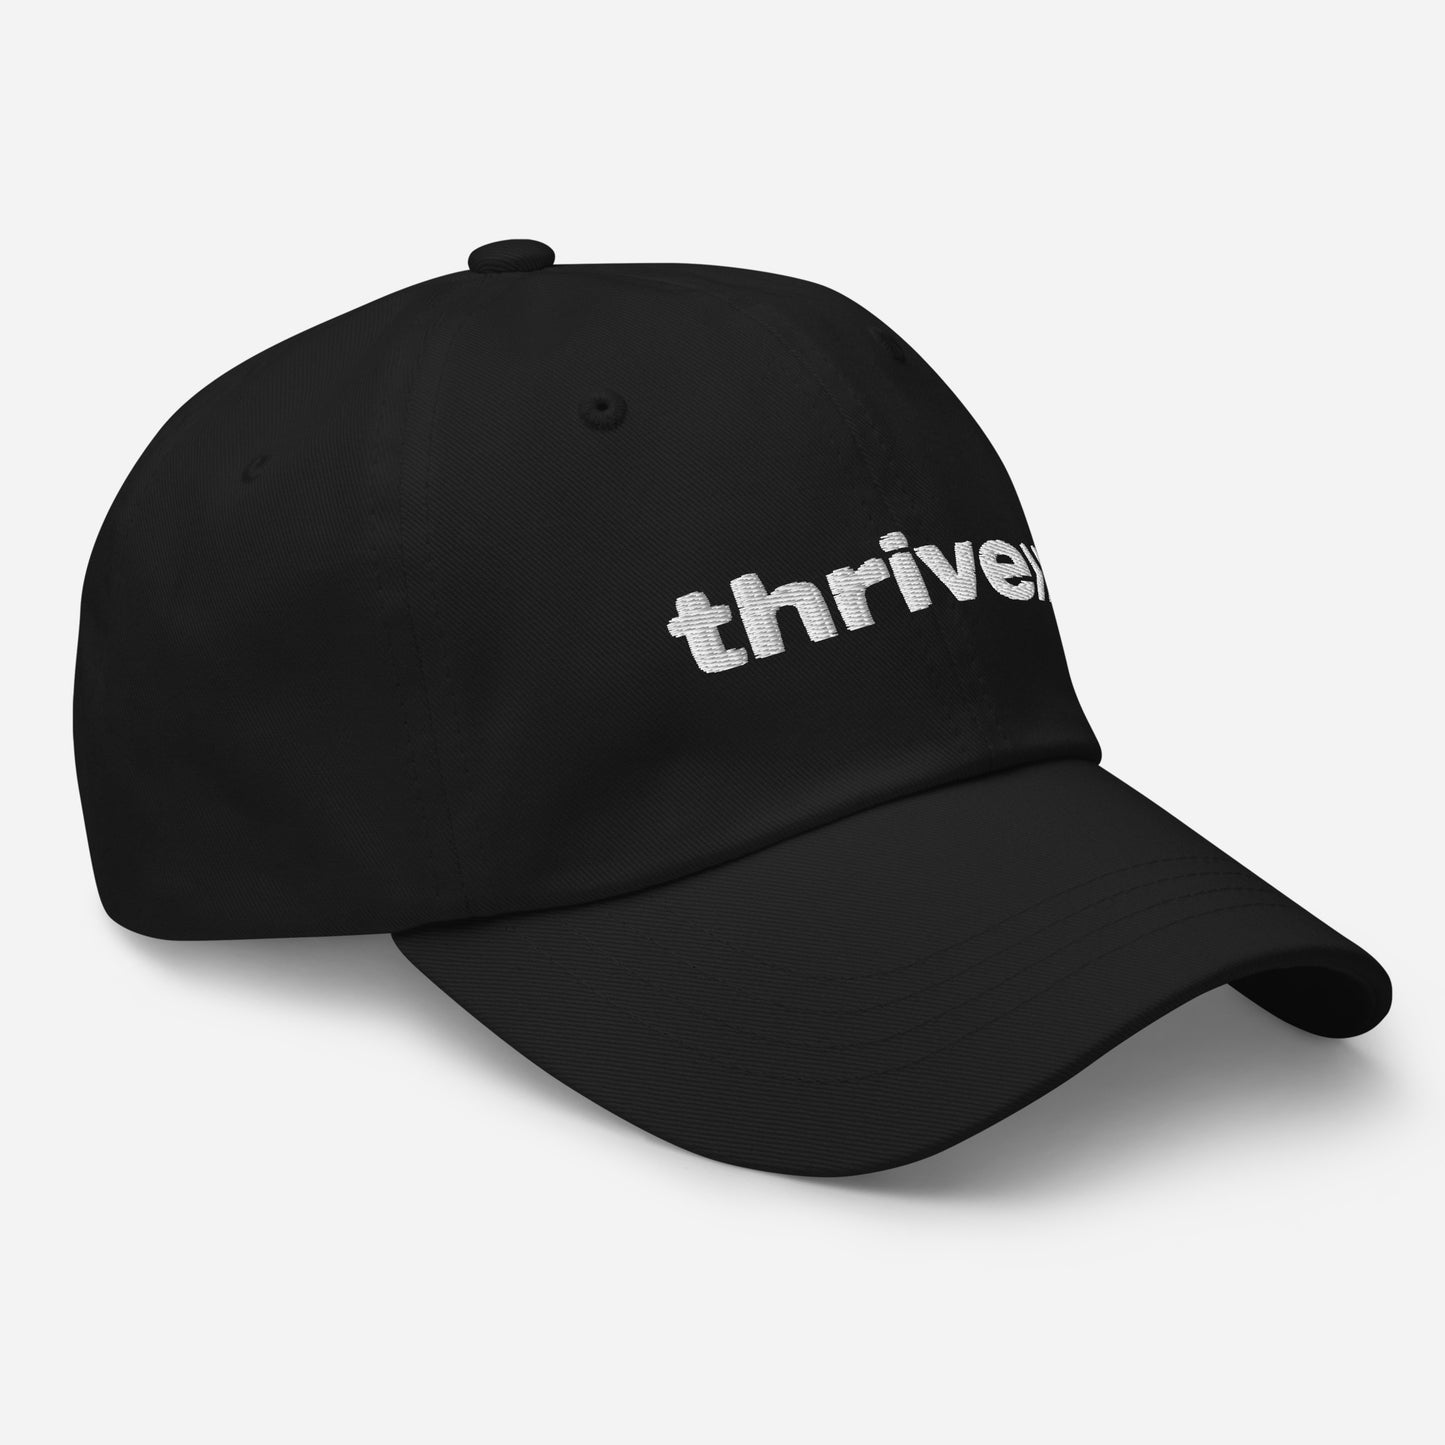 Thrive Dad hat